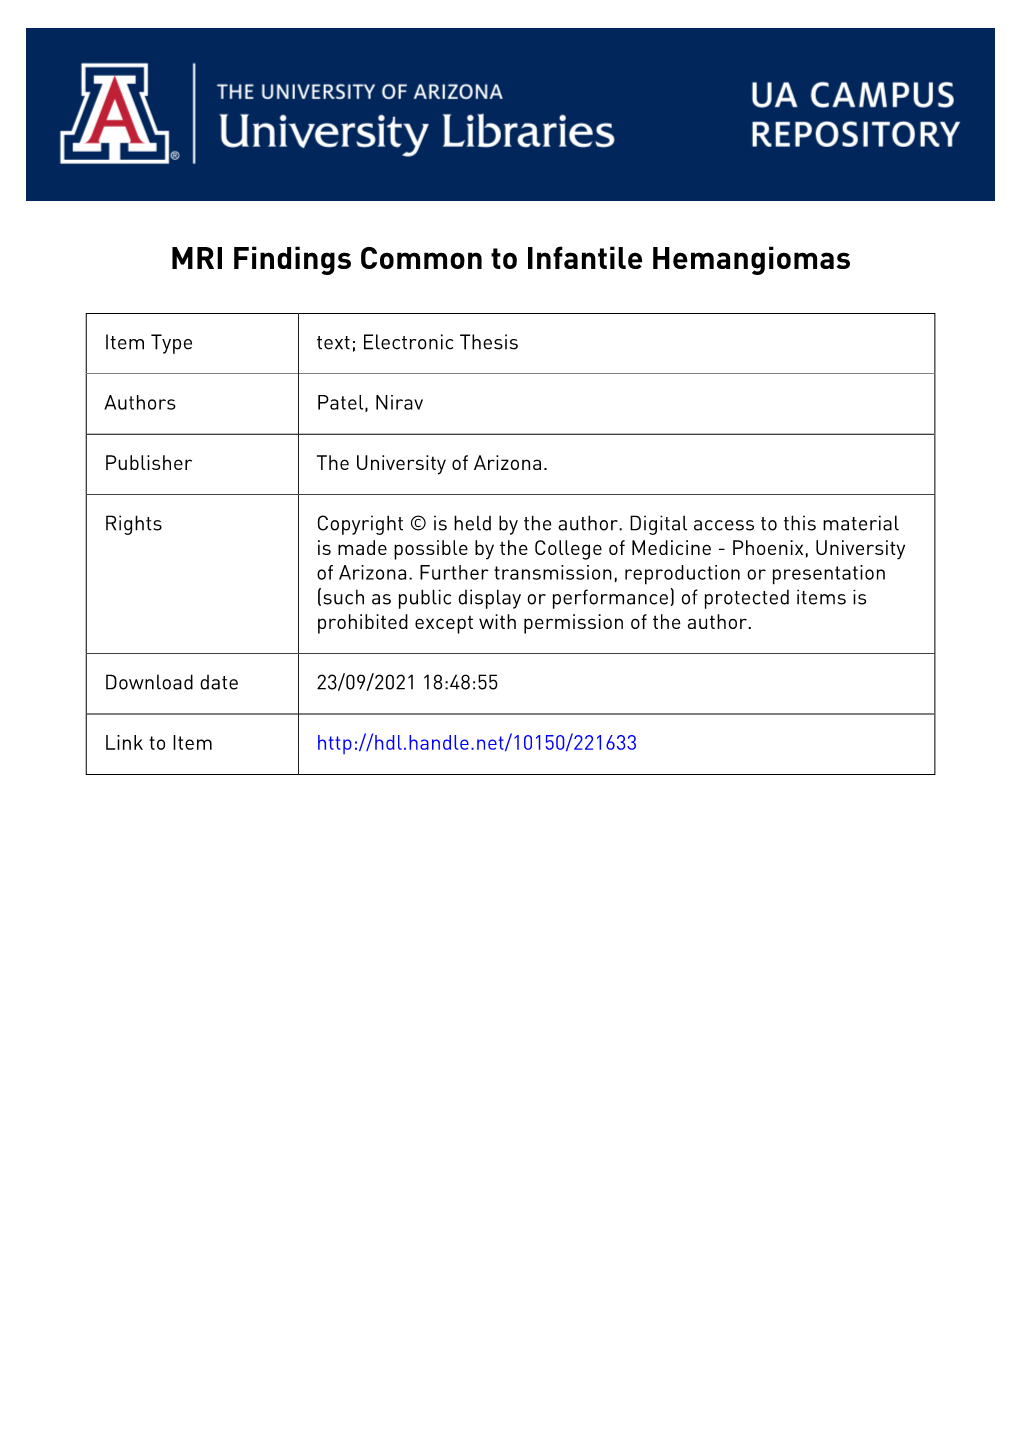 MRI Findings Common to Infantile Hemangiomas